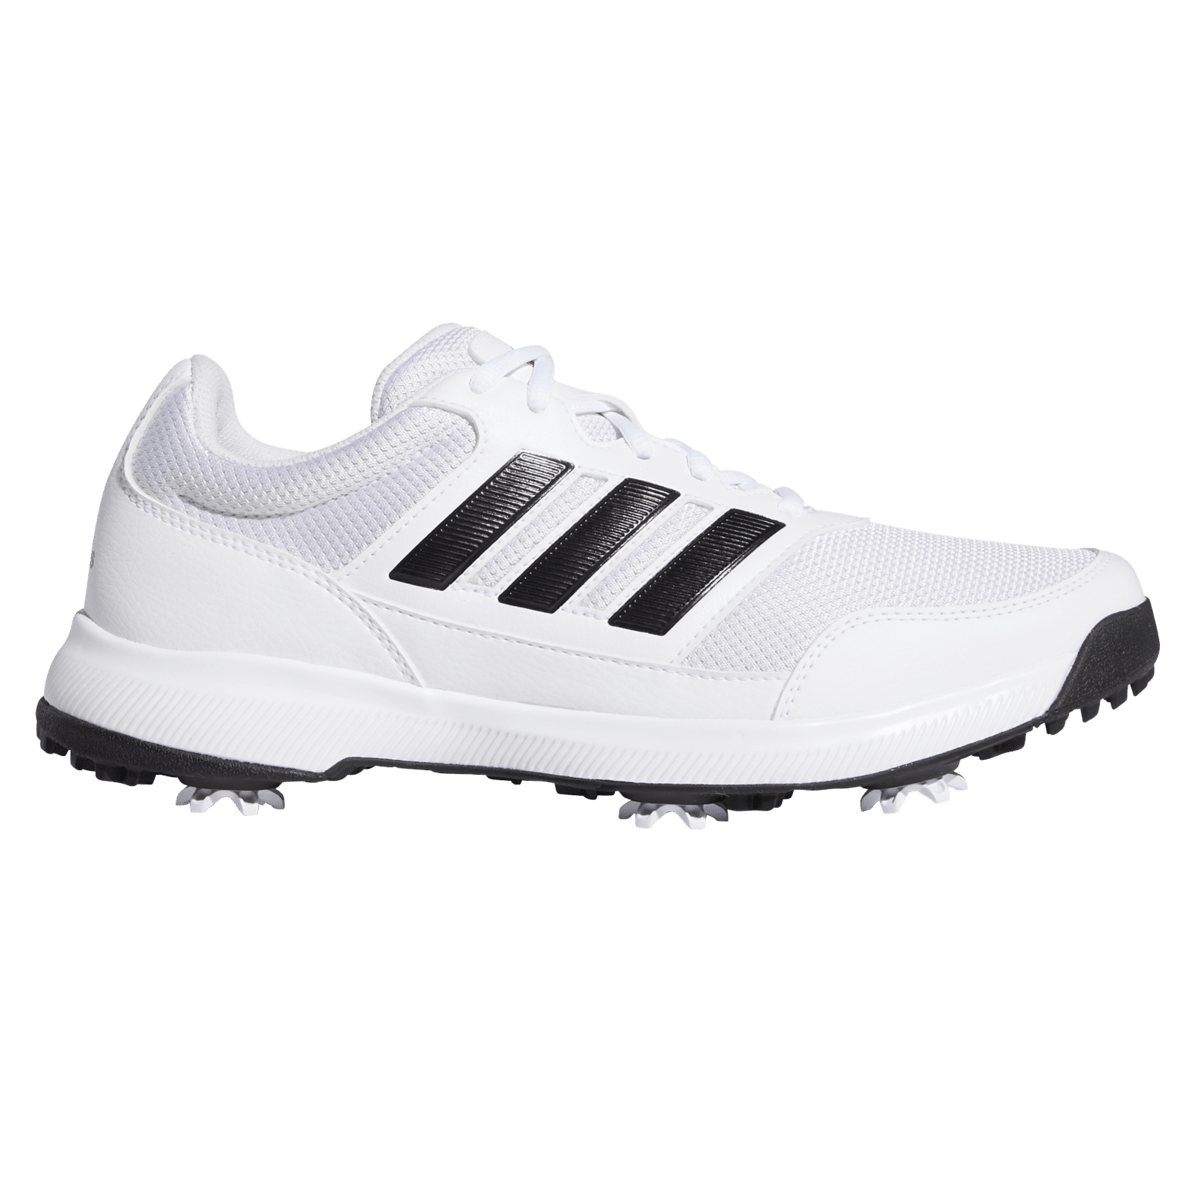 adidas tech response golf shoes review